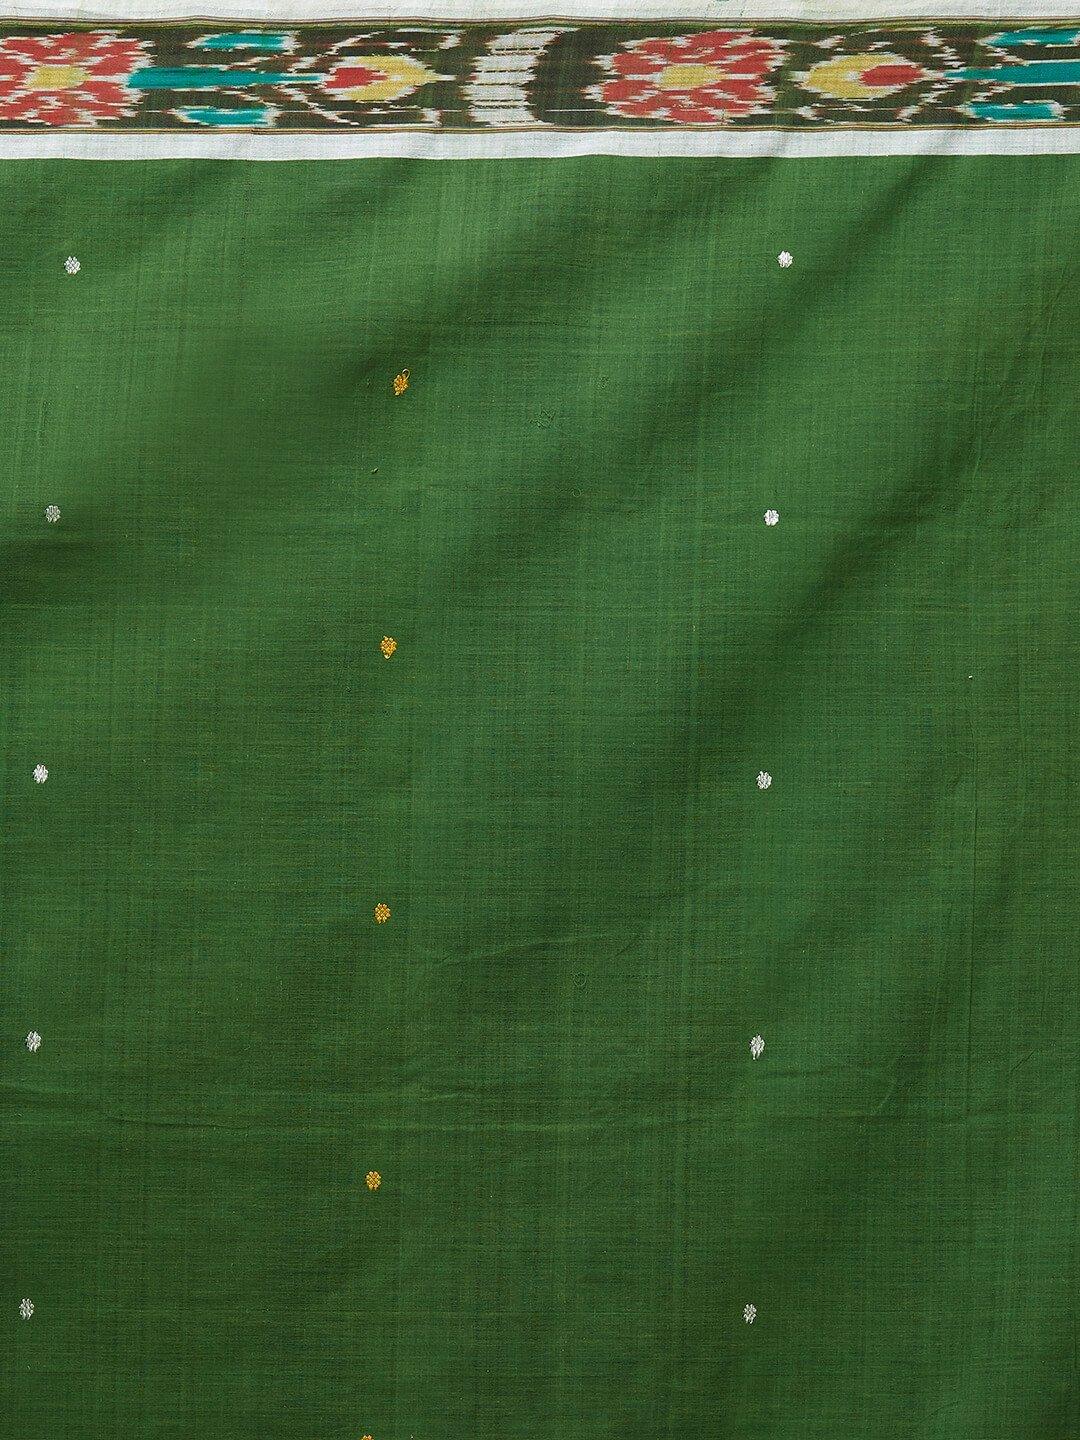 CraftsCollection.in -Green Cotton Sambalpuri Saree with matching Sambalpuri Blouse